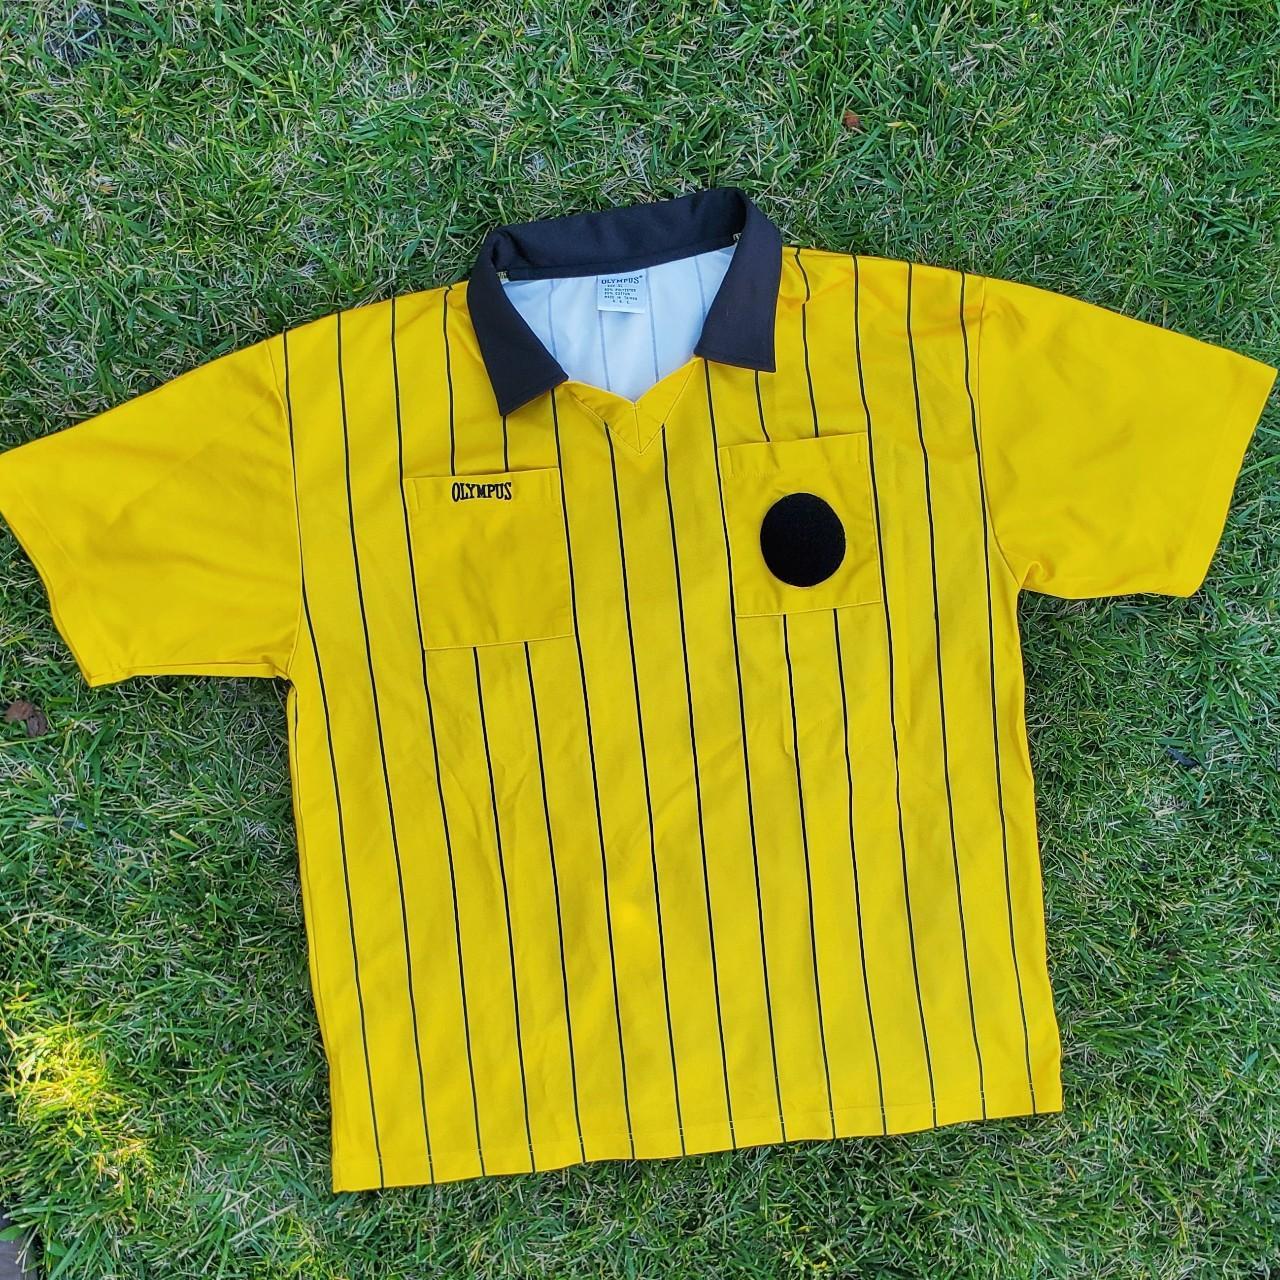 Product Image 1 - Olympus referee shirt. Velcro pockets.